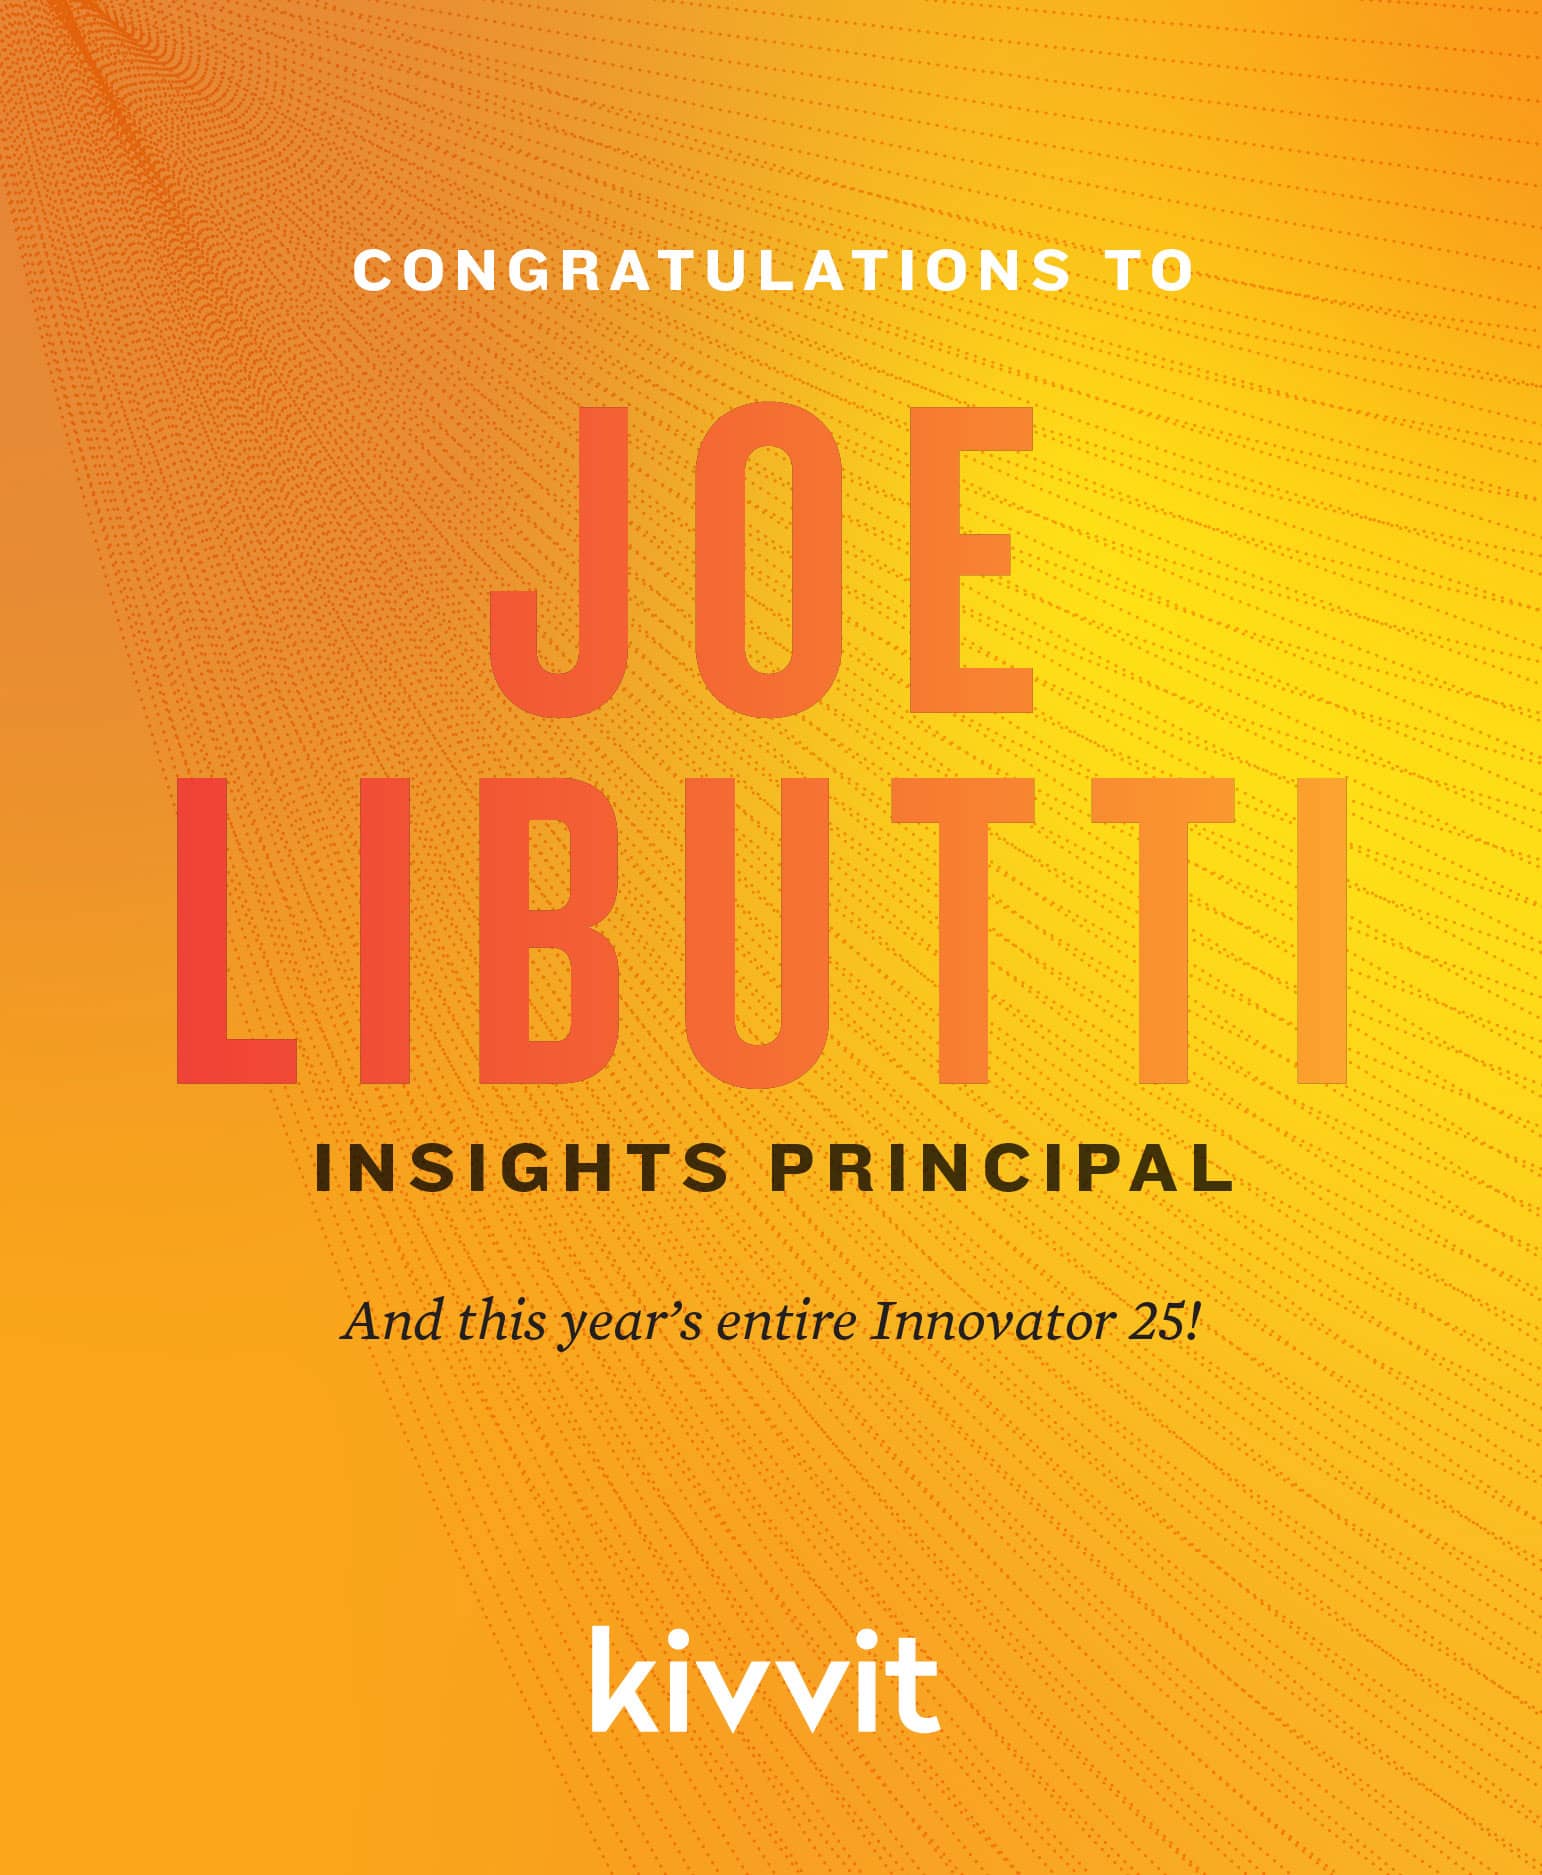 Congratulations to Joe Libutti kivvit